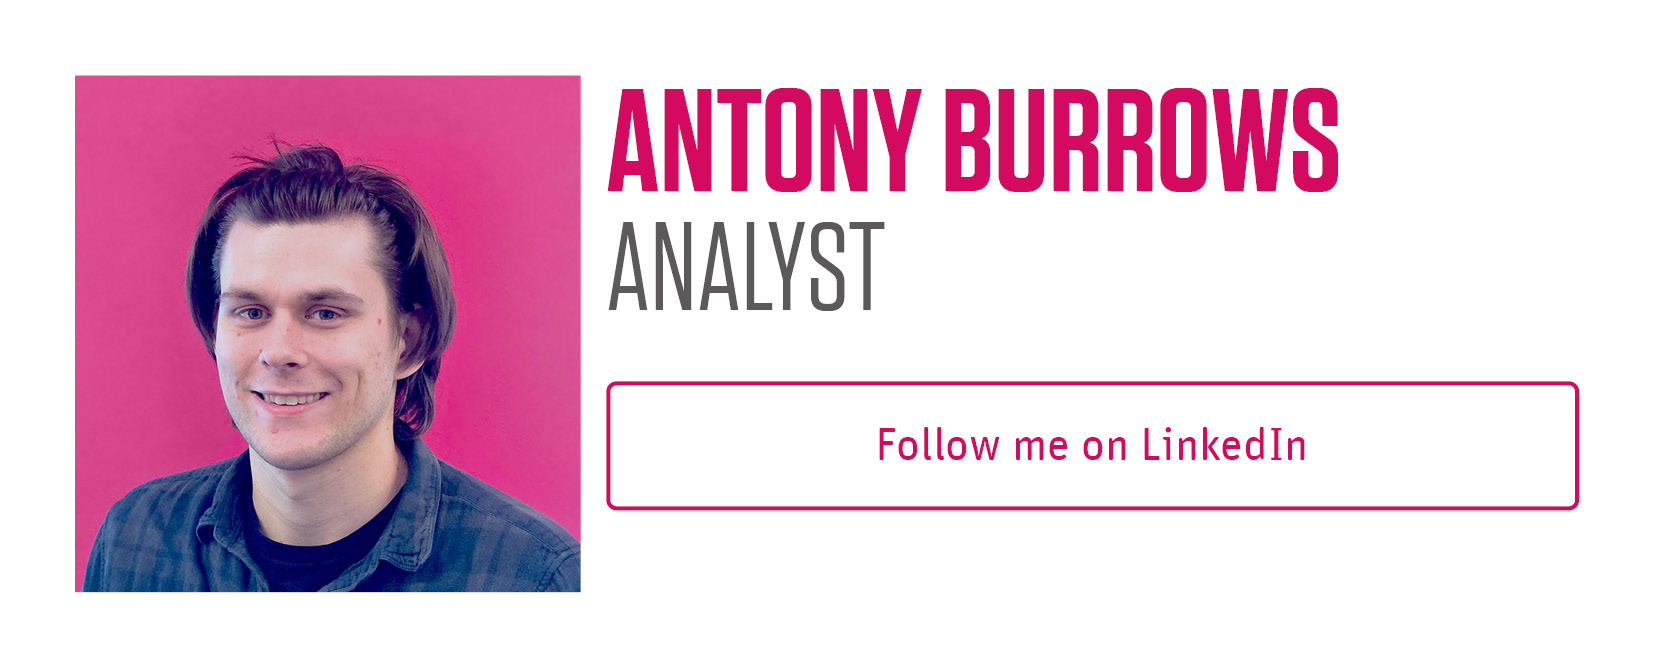 Antony Burrows